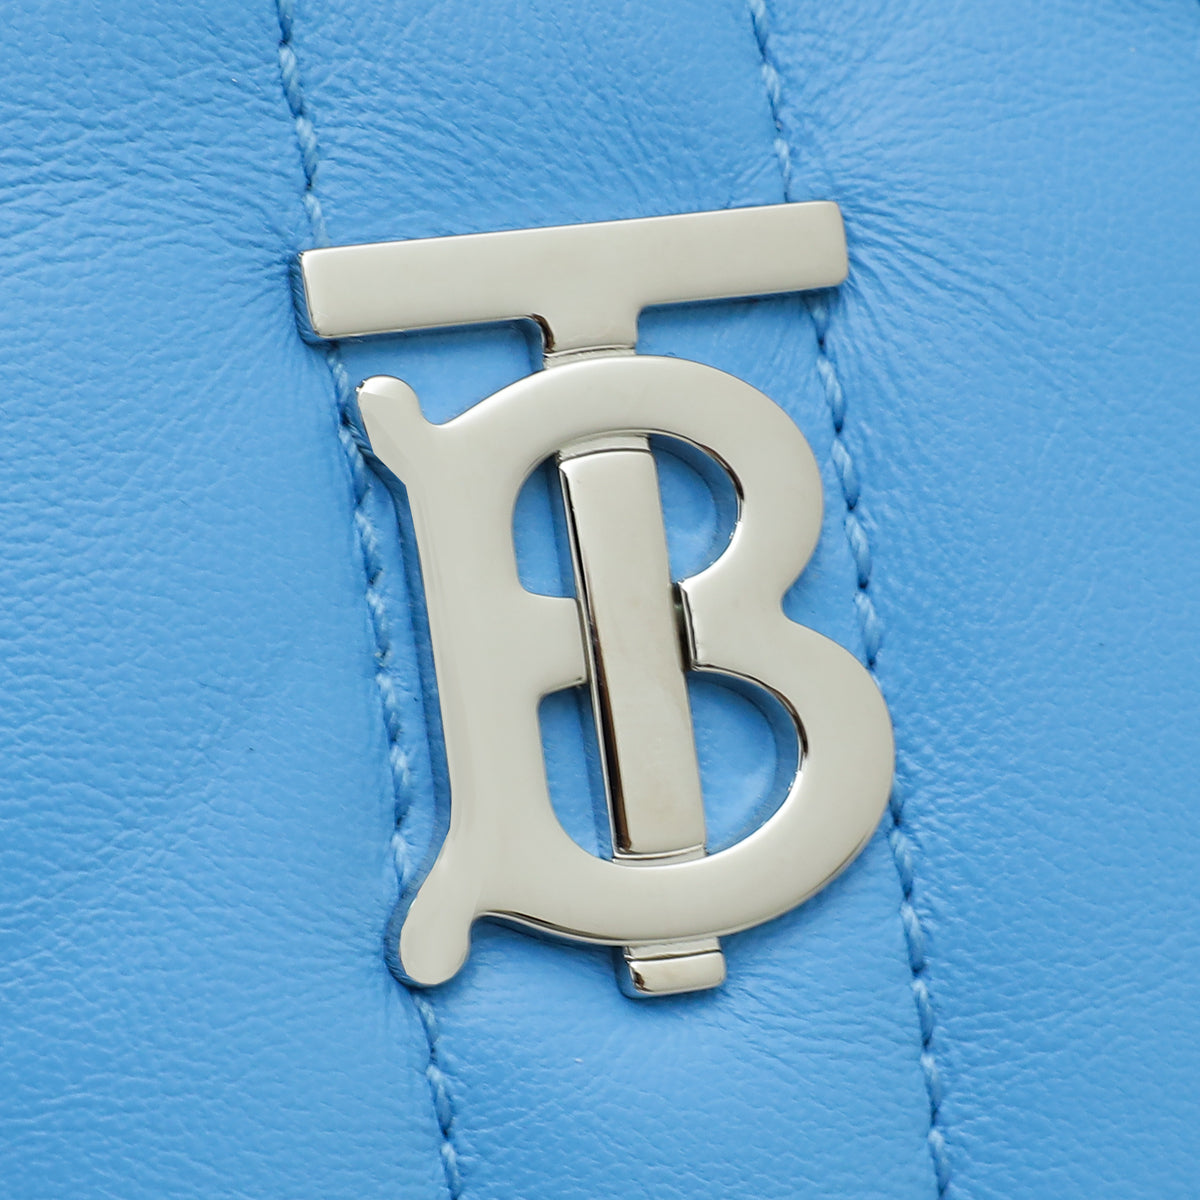 Burberry Bright Sky Blue Lola Double Pouch Crossbody Bag